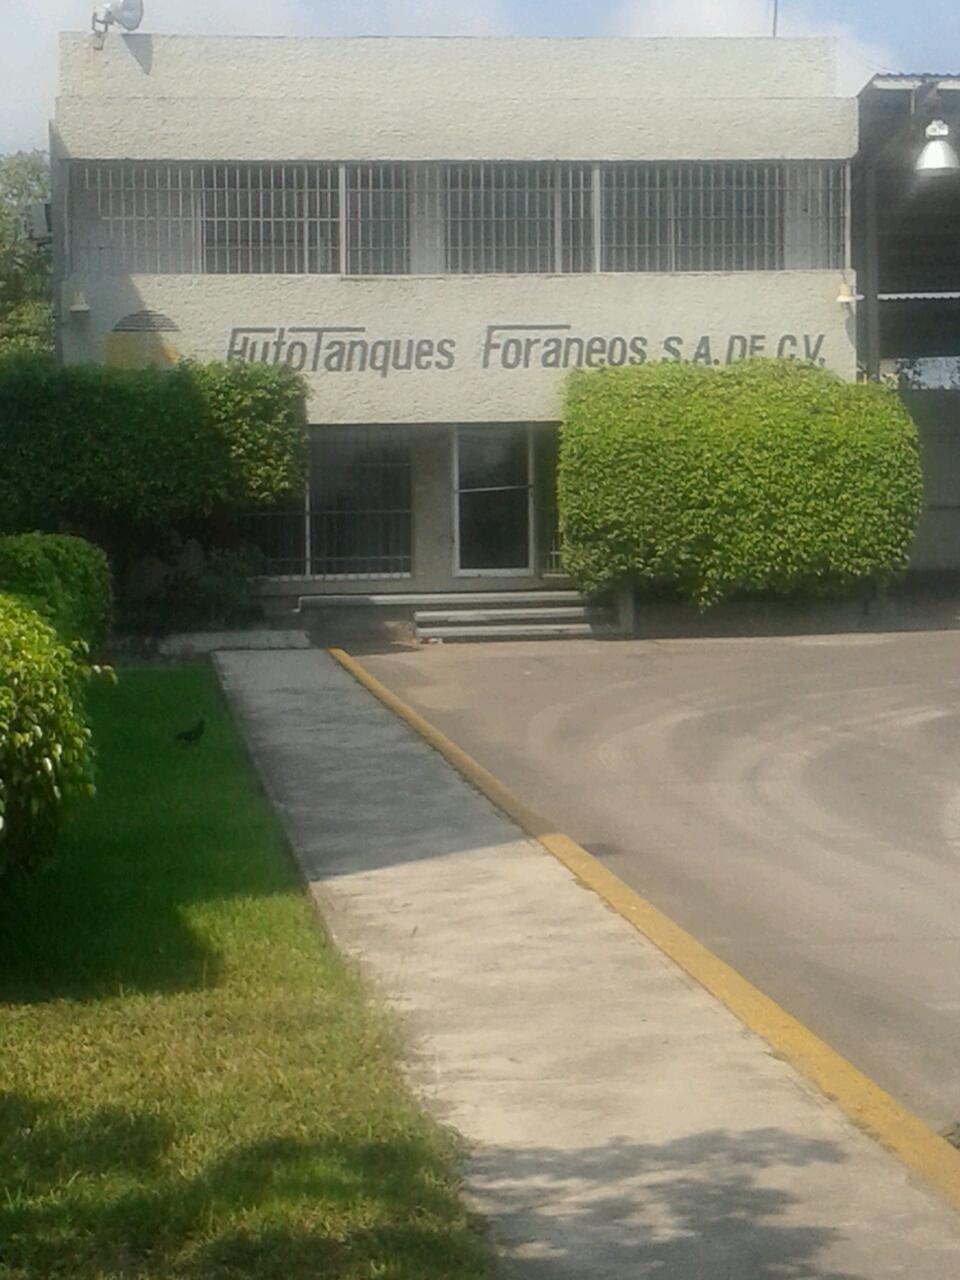 Autotanques Foraneos S.A. de C.V.